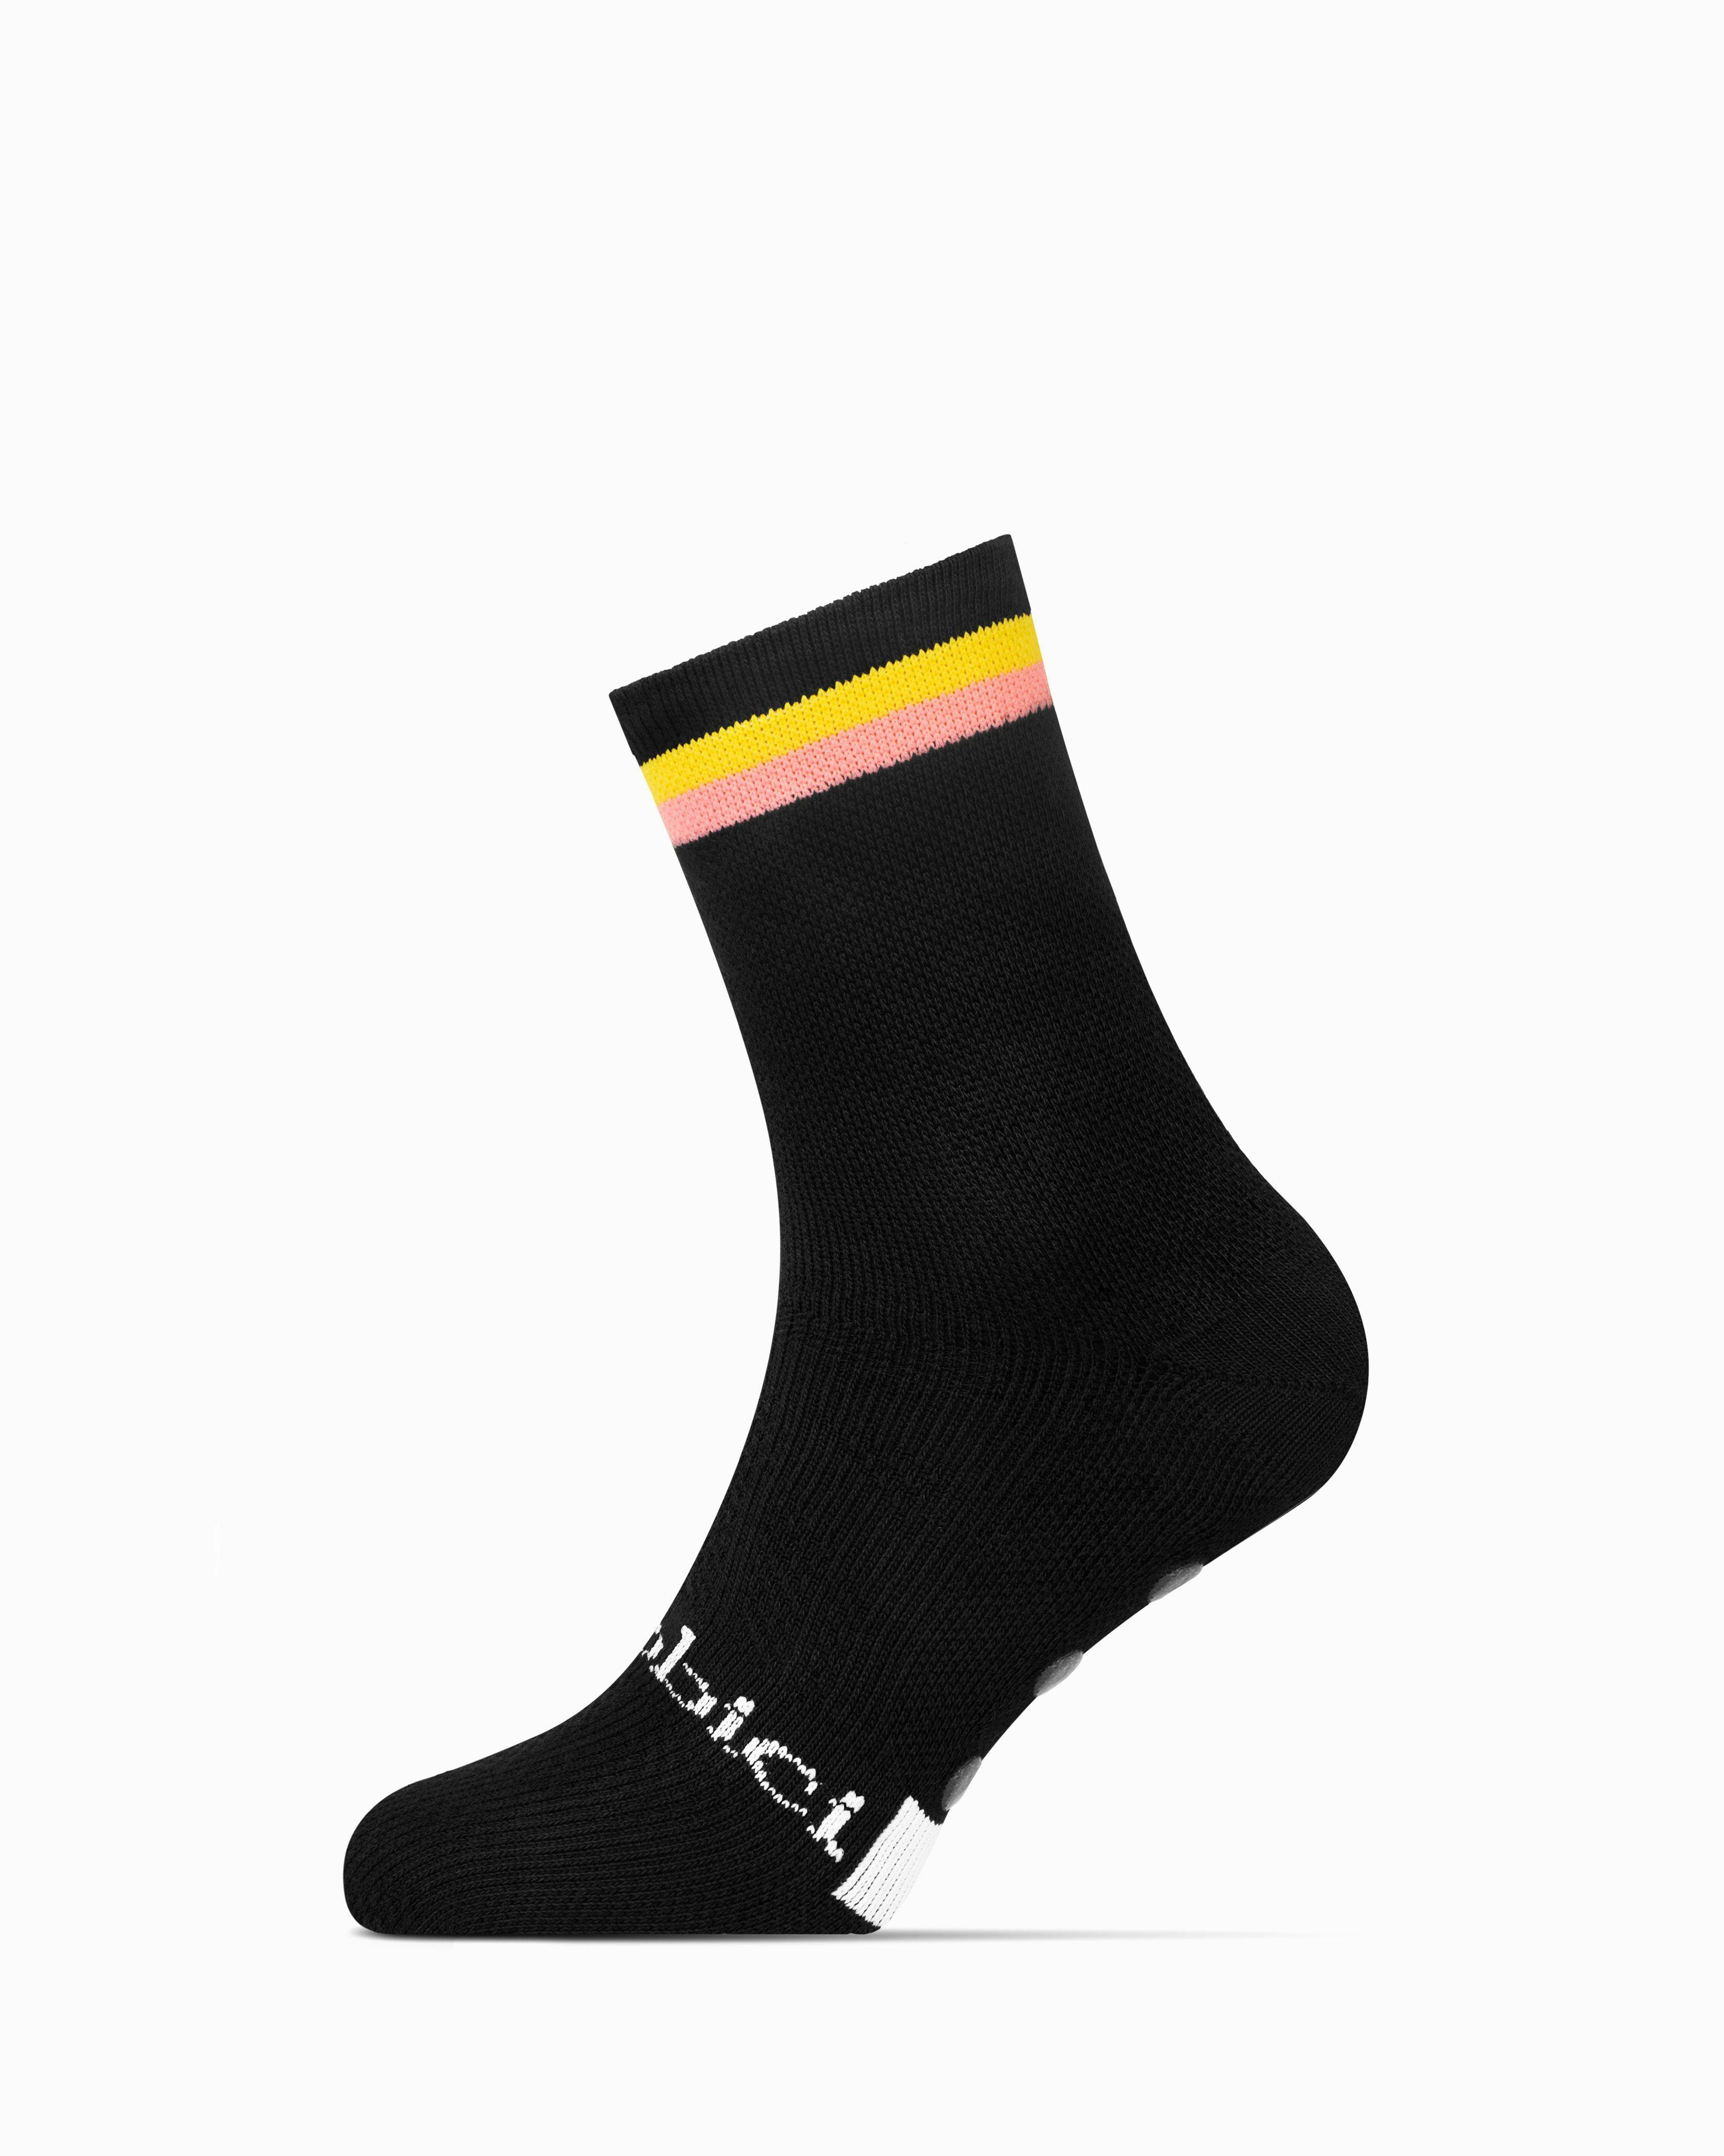 Premgripp Socks (Black)